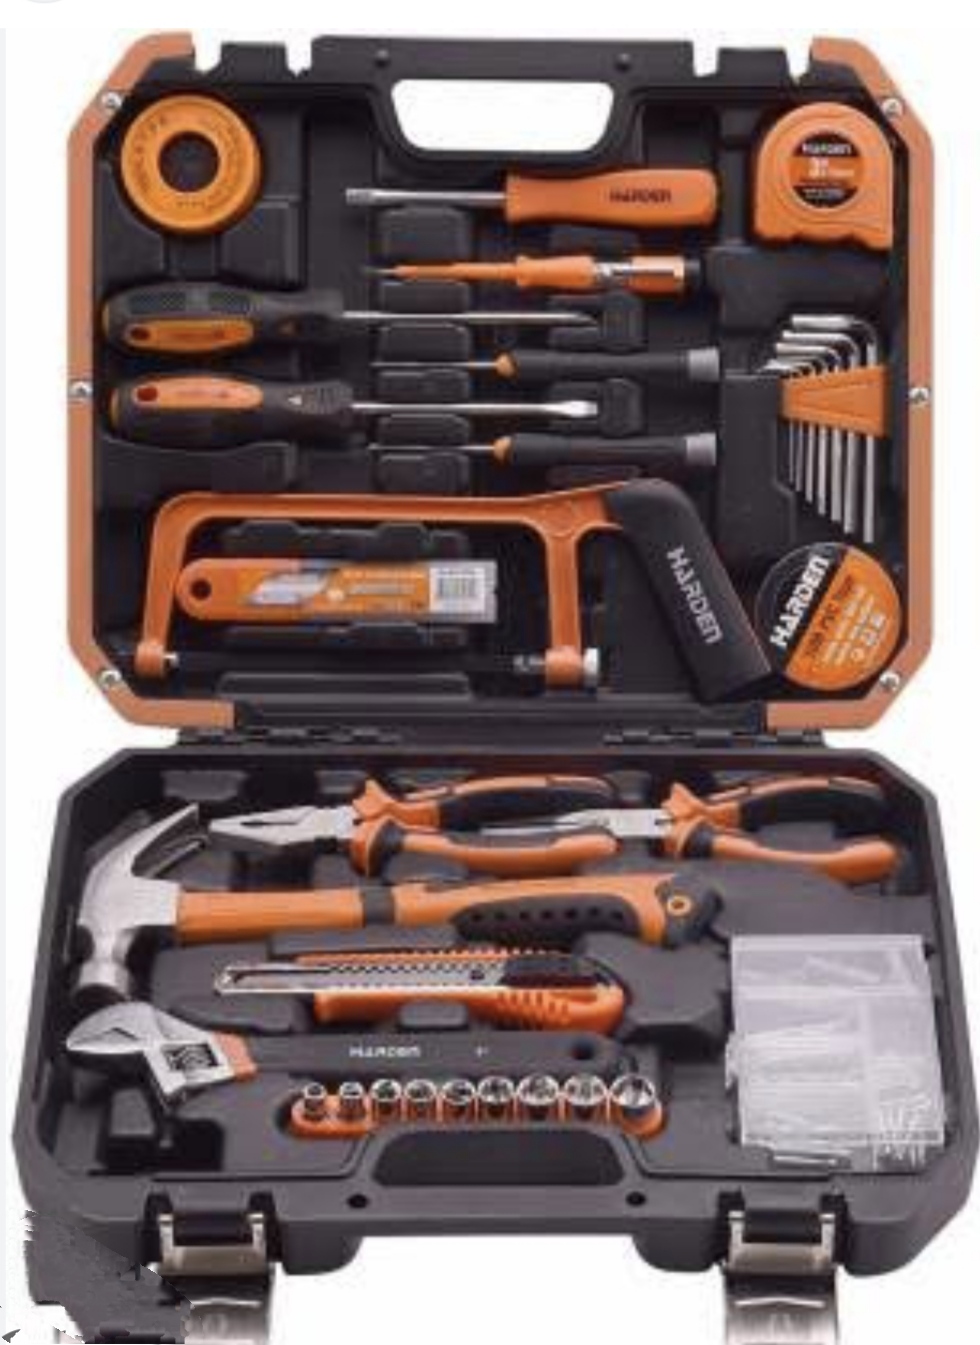 39-piece tool kit christmas gift for a girl living alone